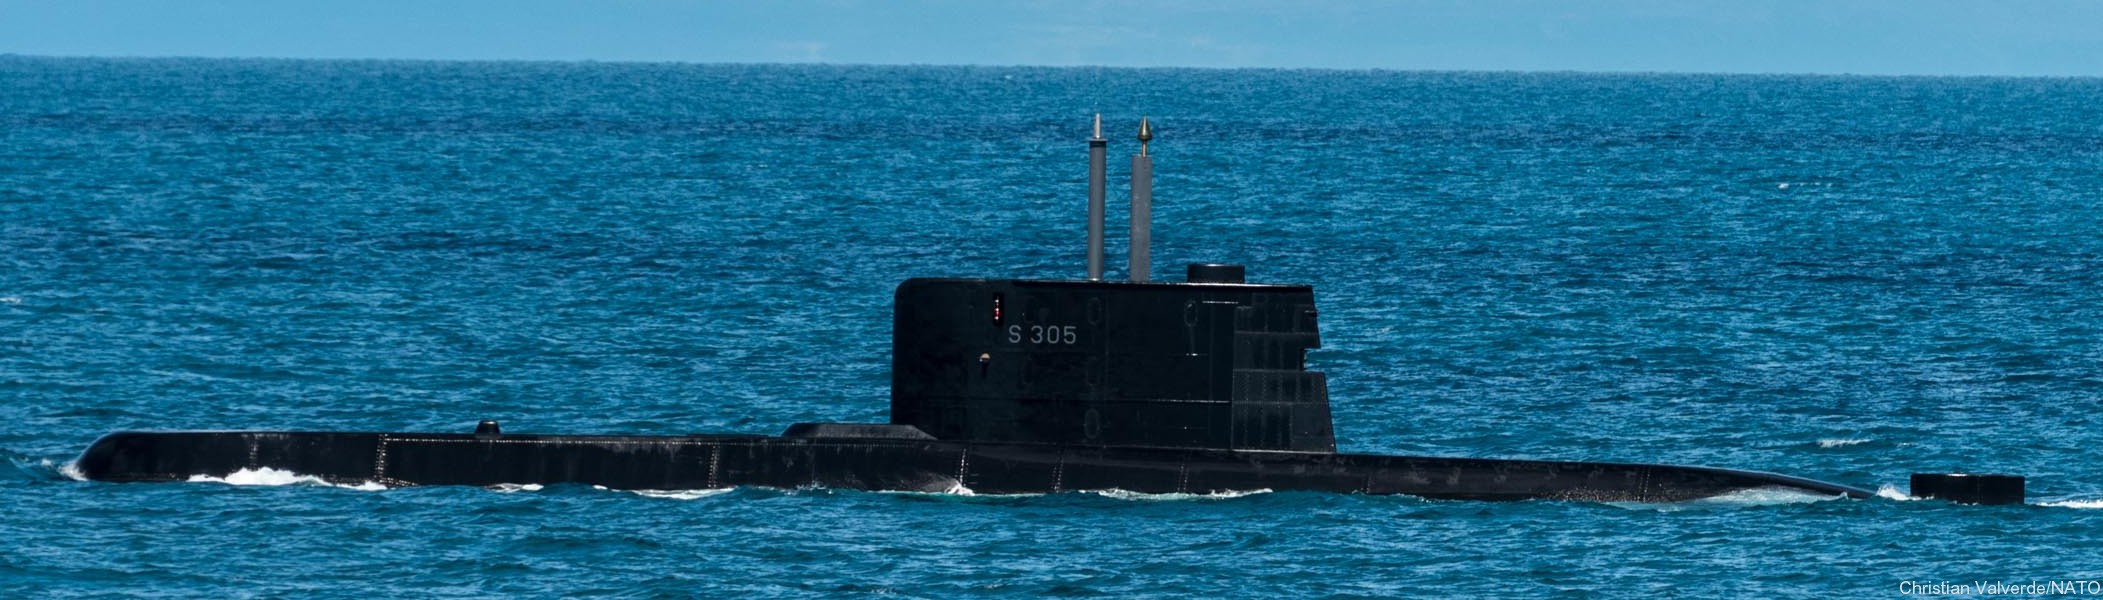 s-305 hnoms knm uredd ula class submarine type 210 attack ssk undervannsbåt royal norwegian navy sjøforsvaret 11